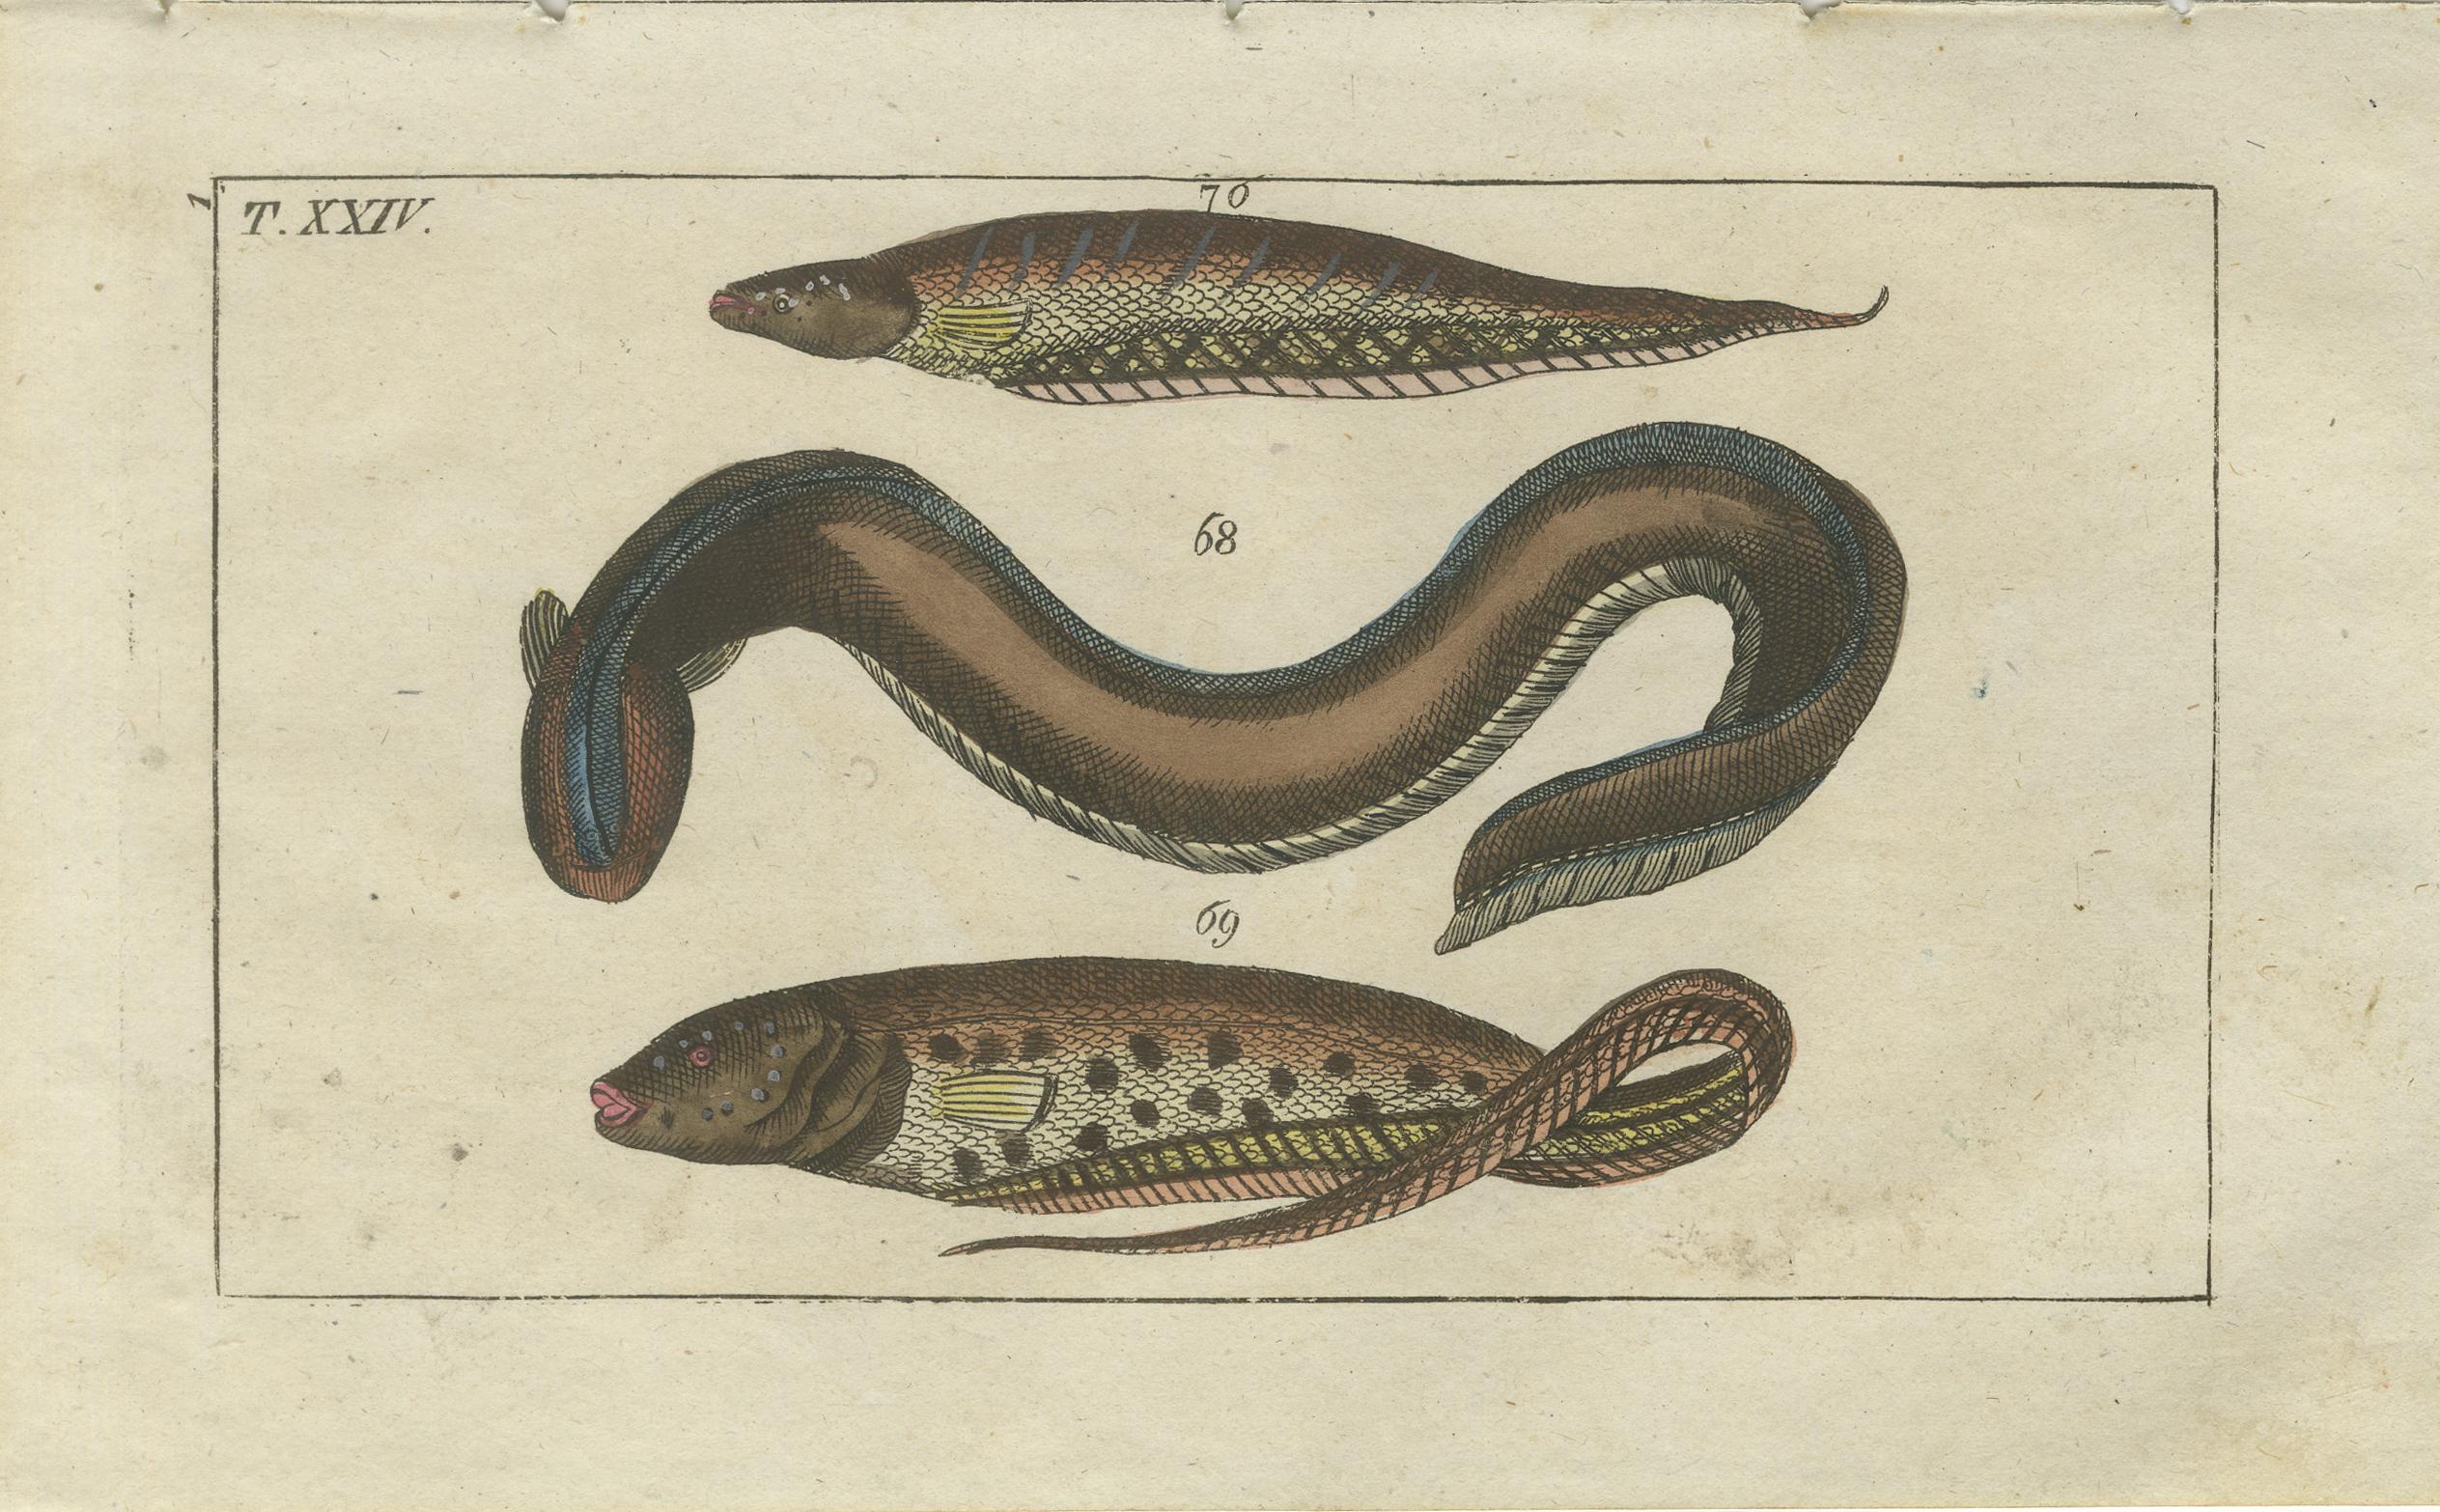 Set of three original antique fish prints. Sea lamprey eel, Petromyzon marinus 1, mouth 2, river lamprey, Lampetra fluviatilis 3,4, and brook lamprey, Lampetra planeri 5. Electric eel, Electrophorus electricus 63, moray eel, 64 spotted snake-eel 68,